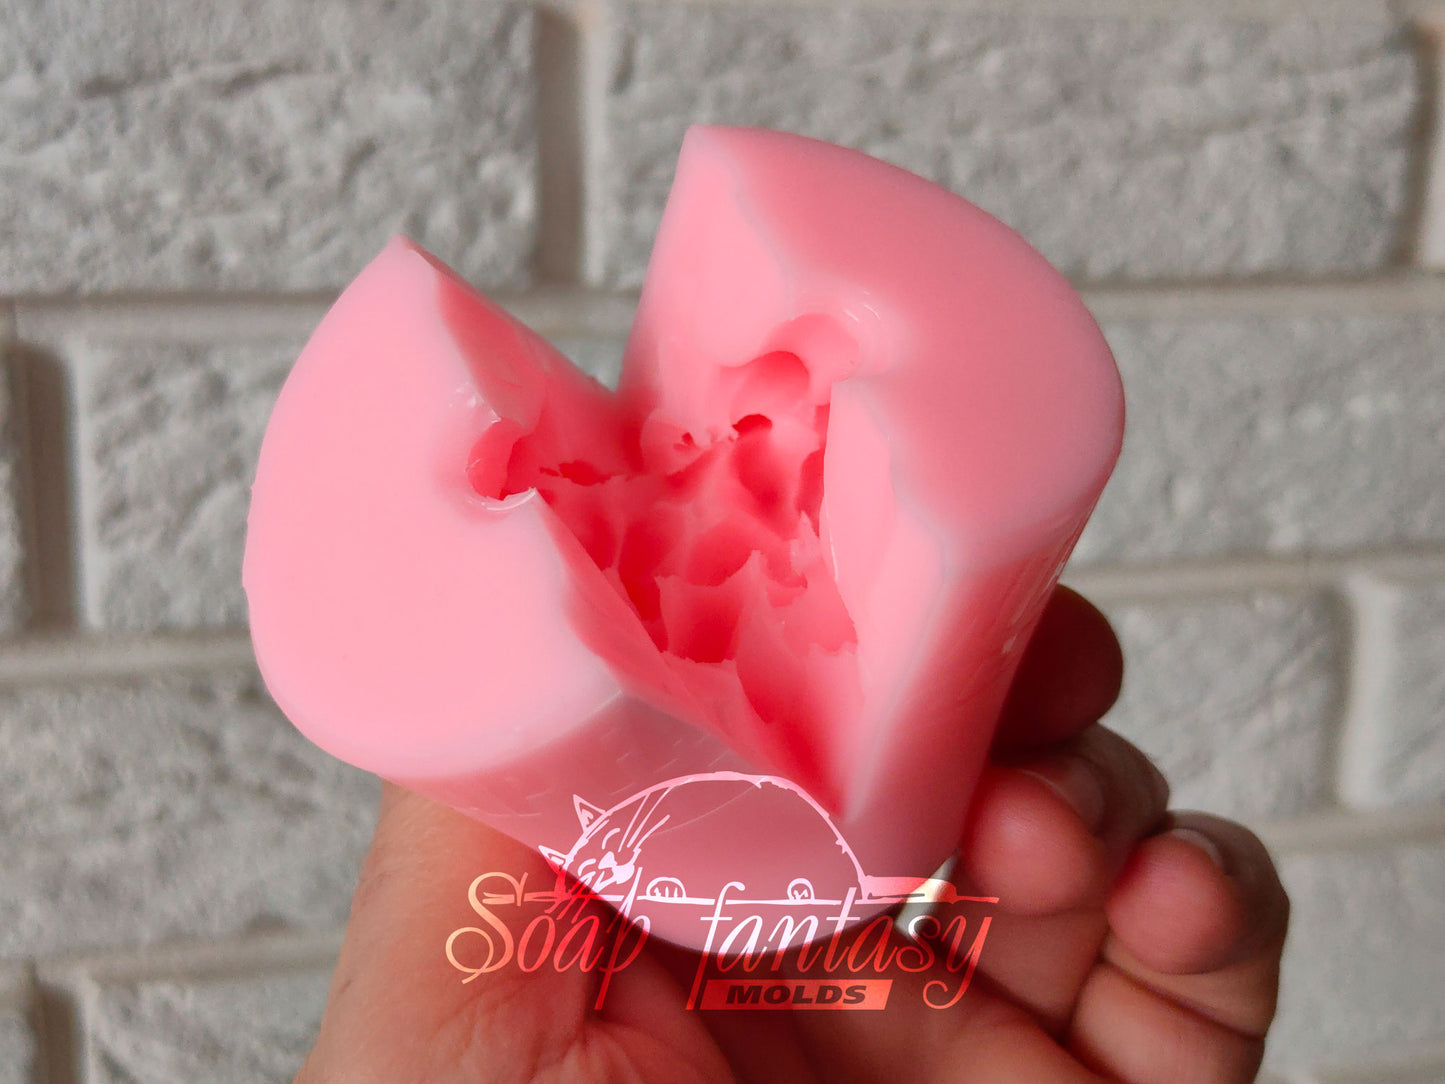 Hydrangea flower (mini) silicone mold for soap making